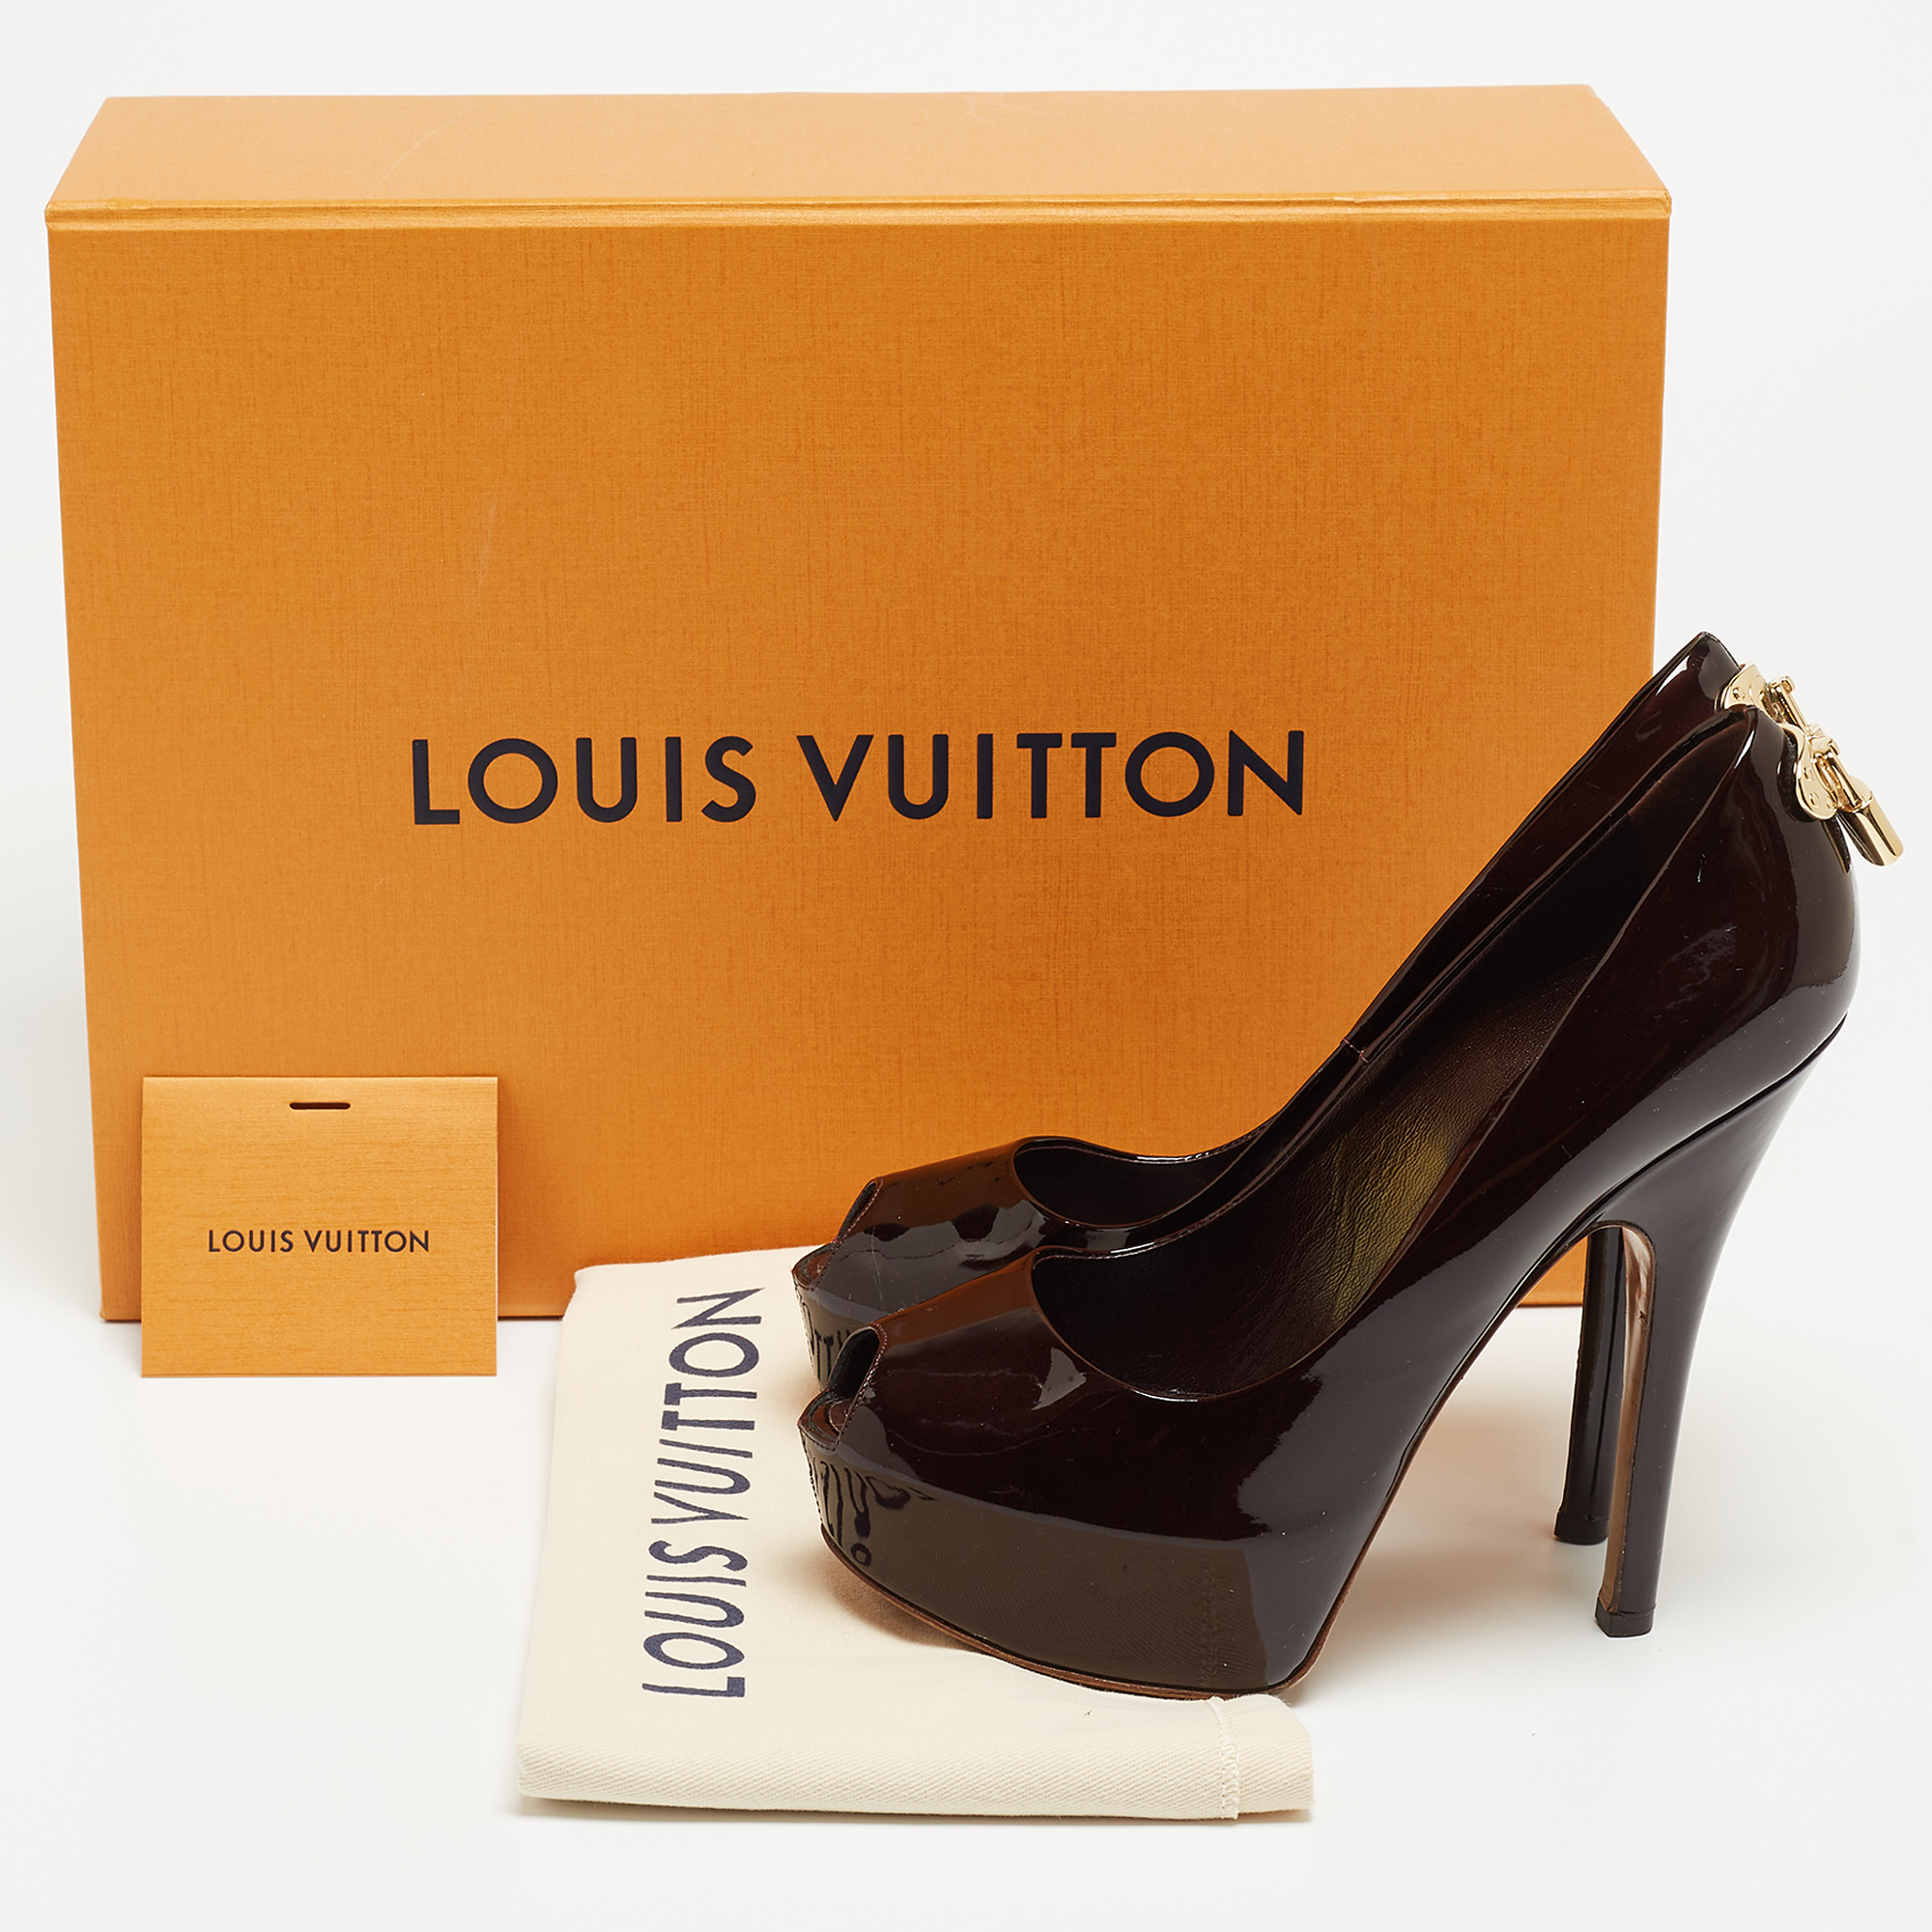 Louis Vuitton Burgundy Patent Leather Oh Really! Peep Toe Platform Pumps Size 37.5